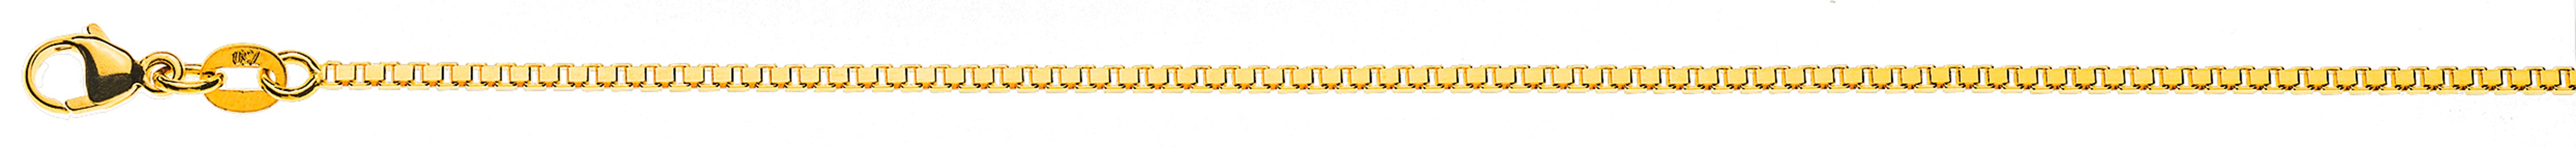 AURONOS Style Necklace yellow gold 9K Venetian chain diamond cut 45cm 1.4mm